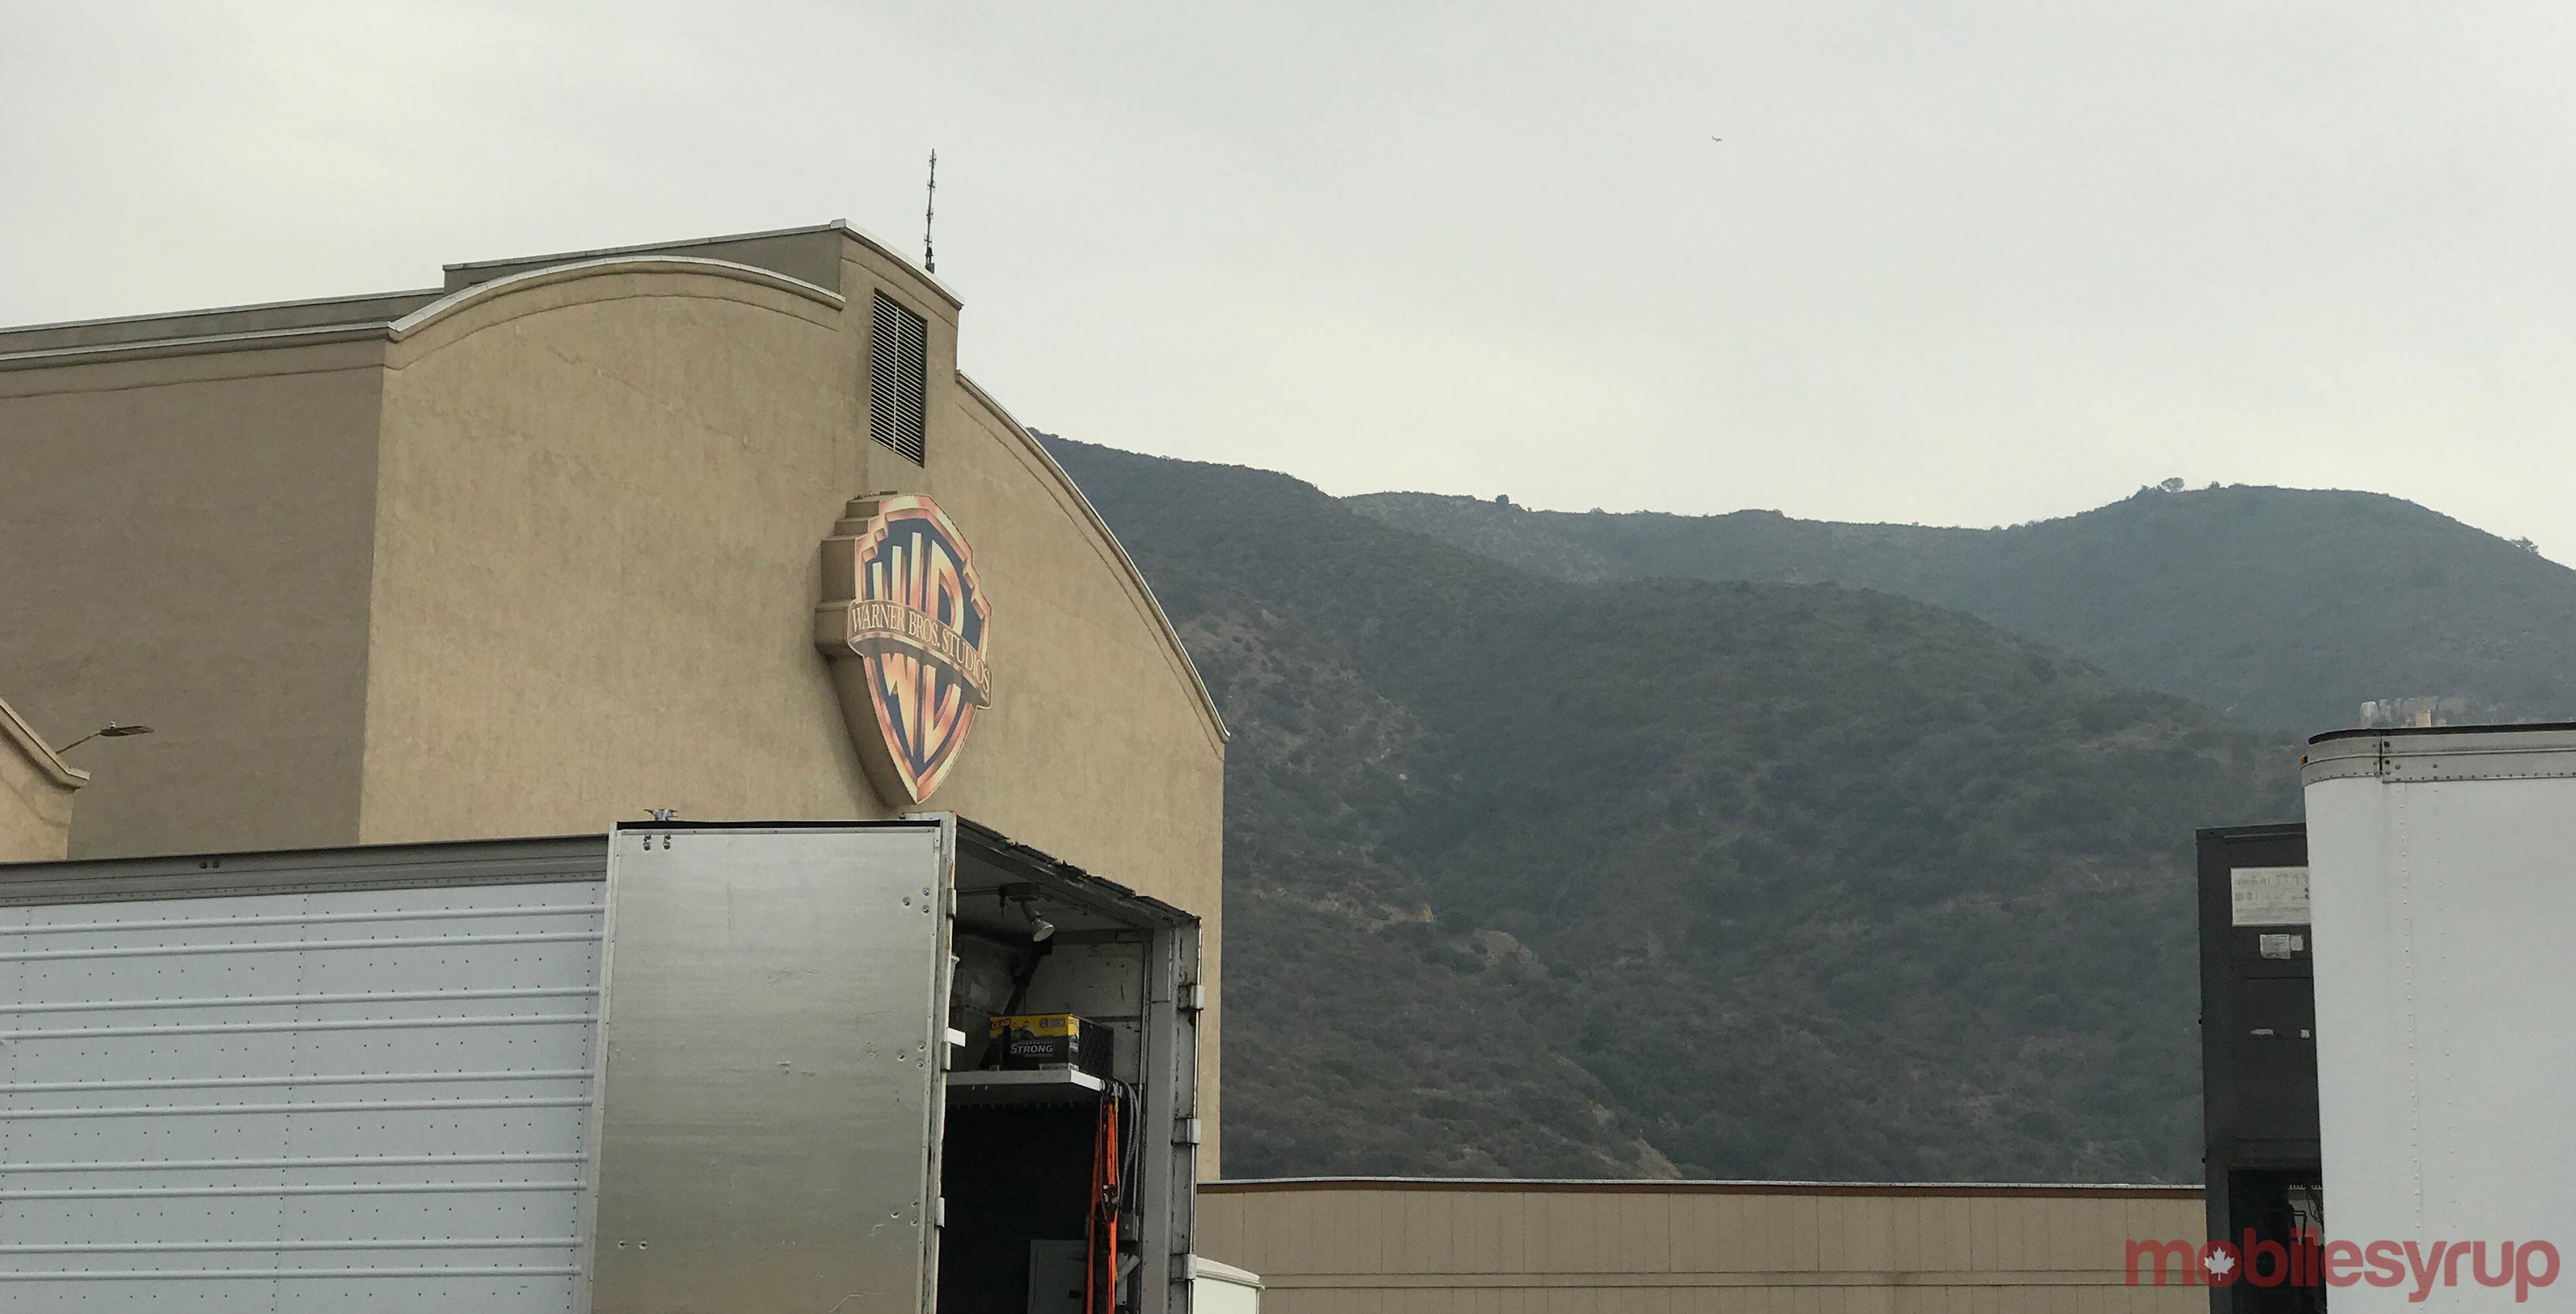 Warner Bros. Entertainment studio